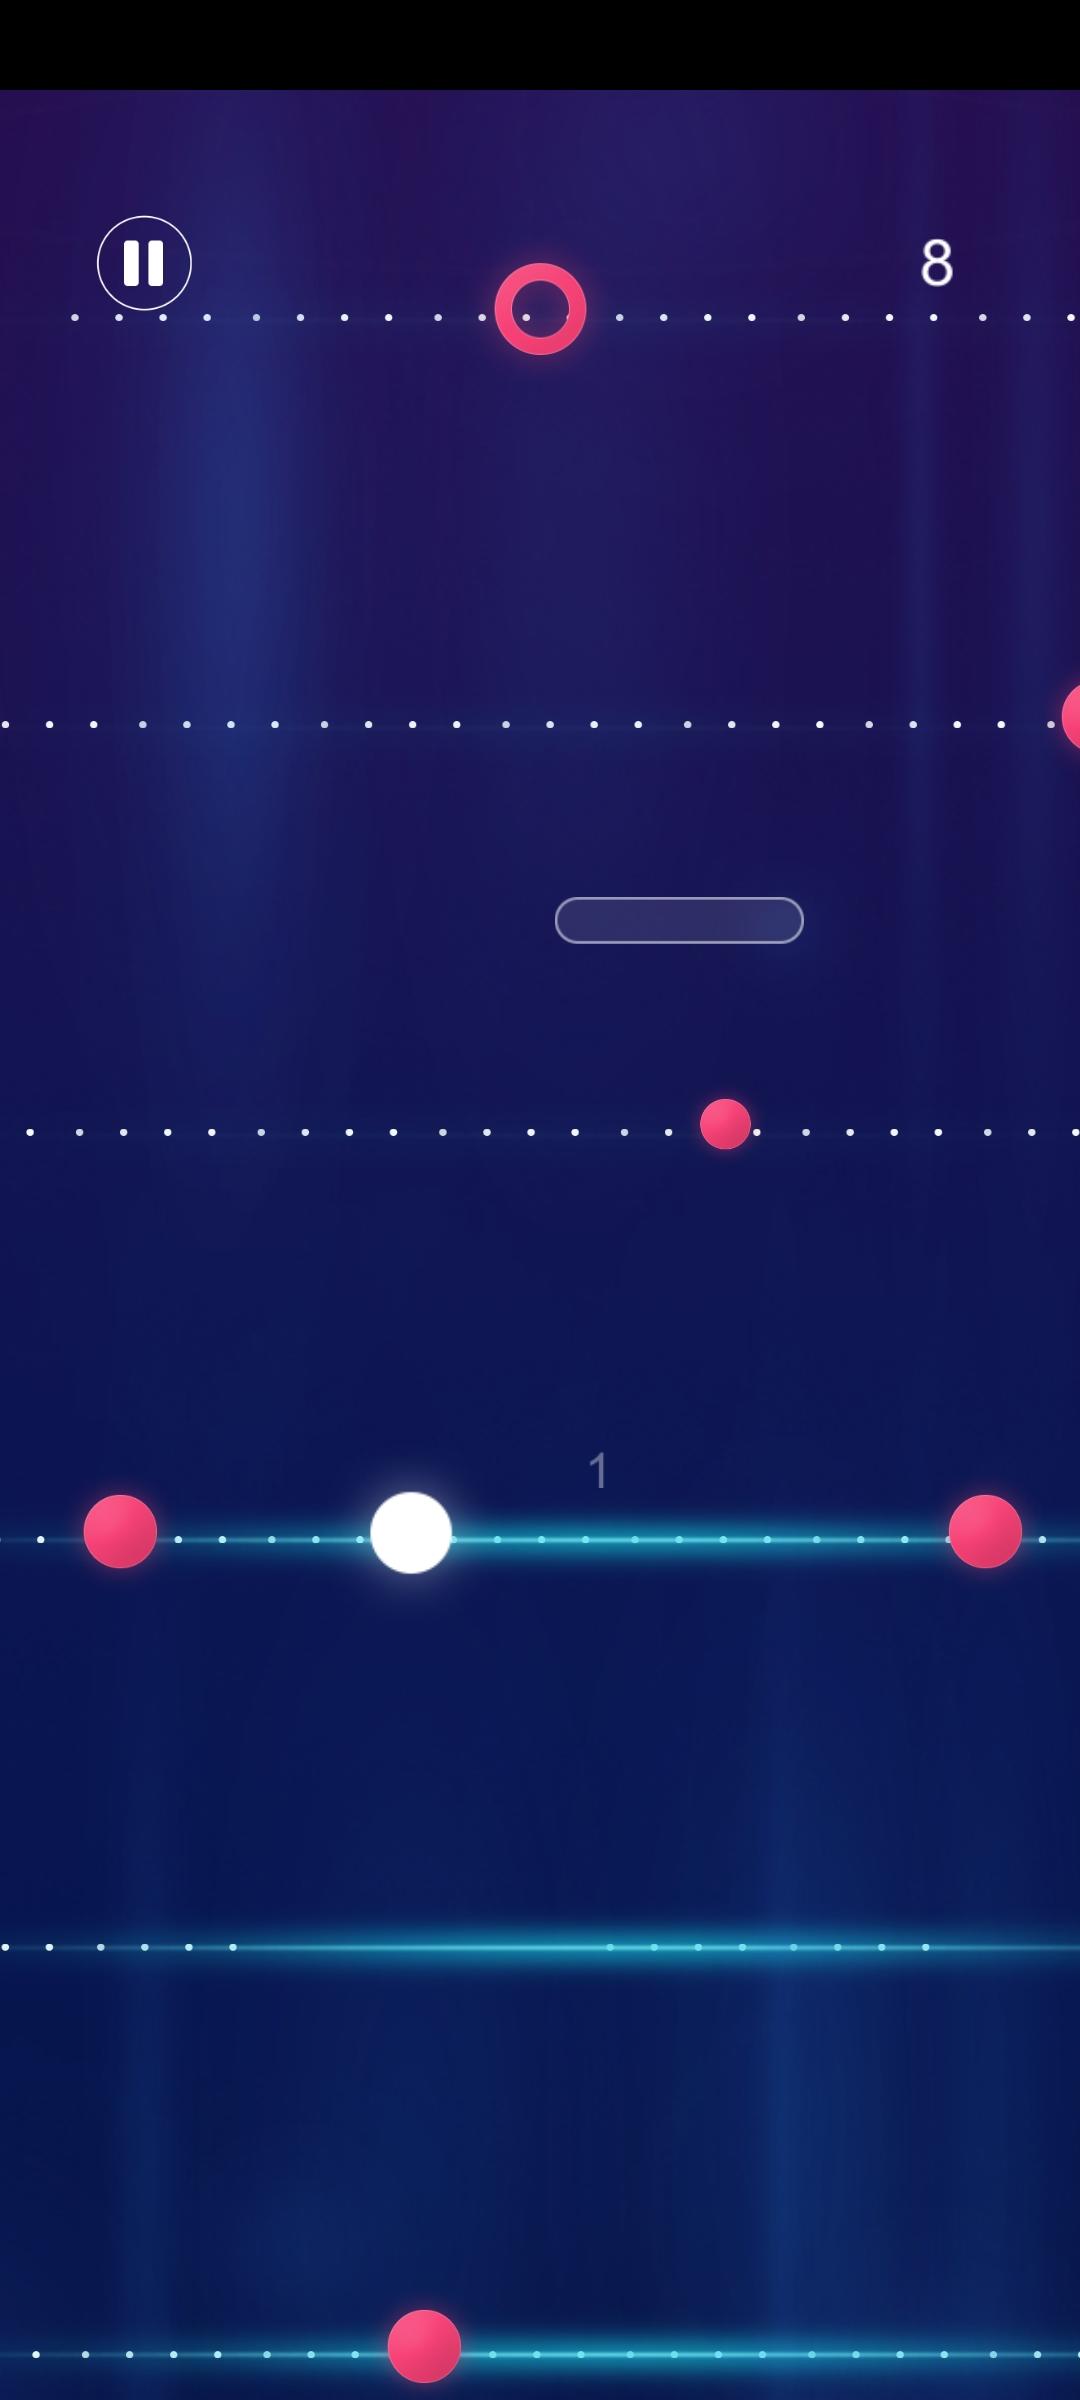 Dot lines - Challenging game ภาพหน้าจอเกม